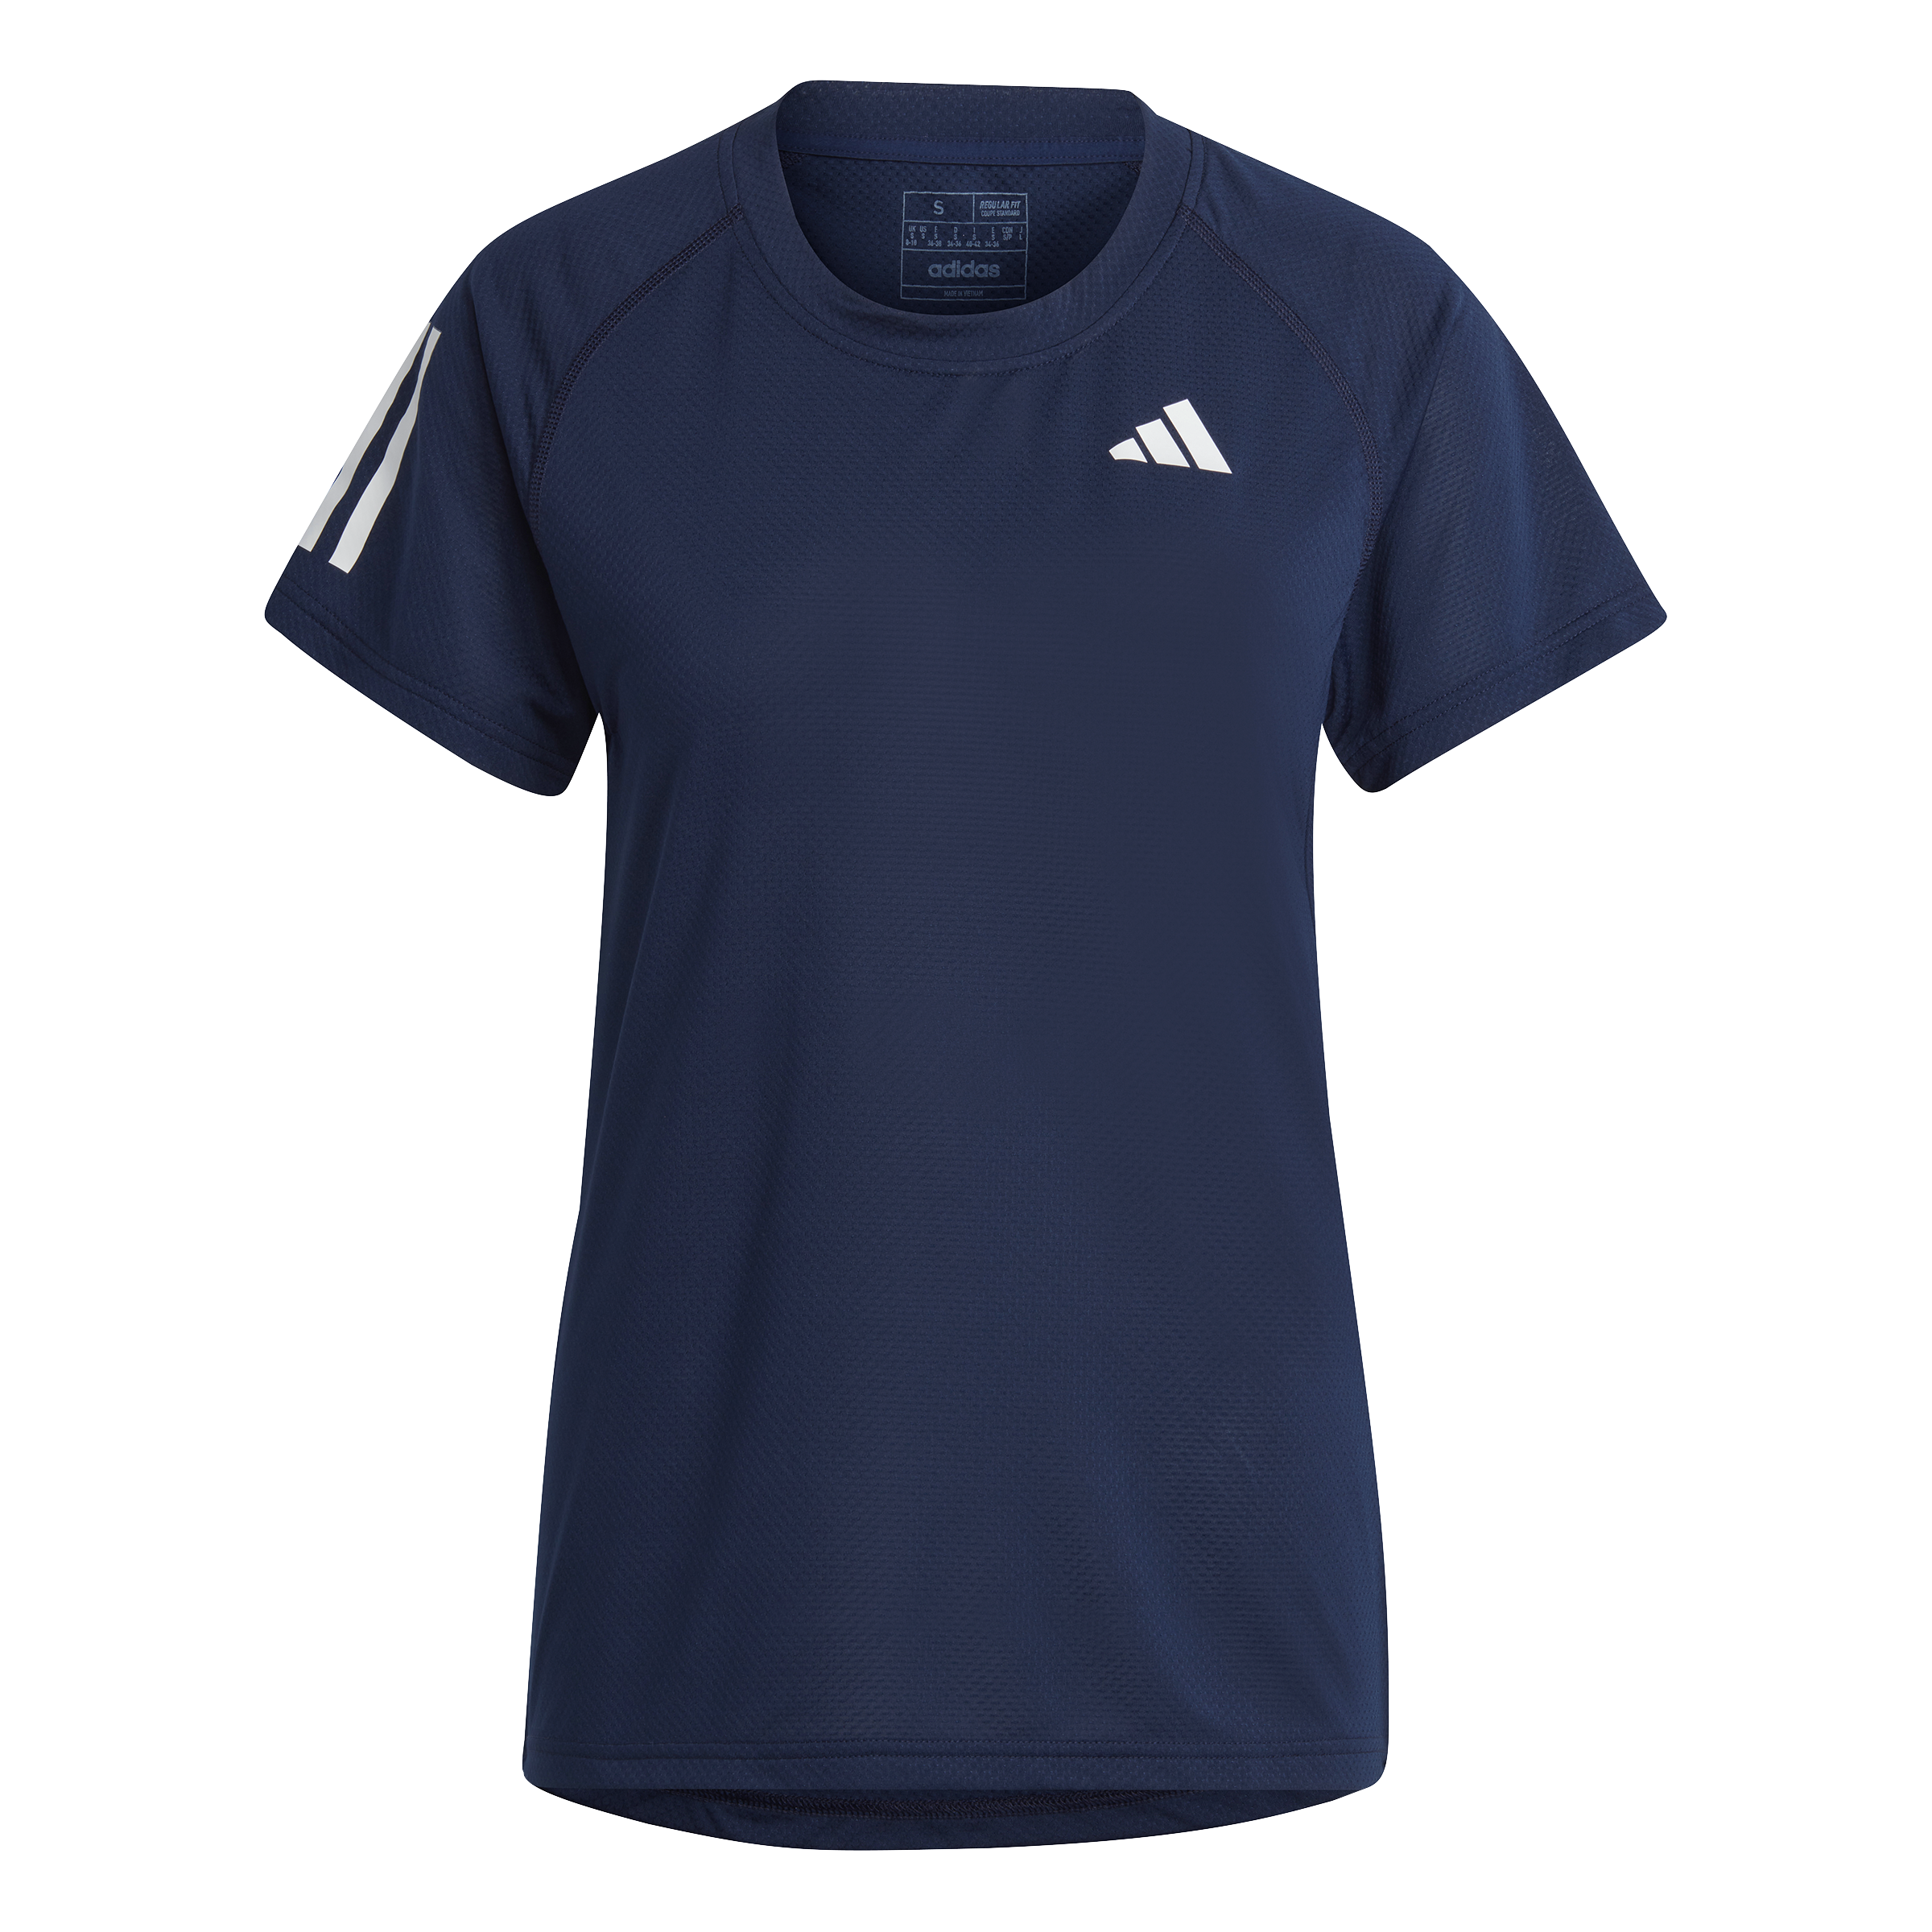 Adidas Club T-shirt Women (Navy) - M